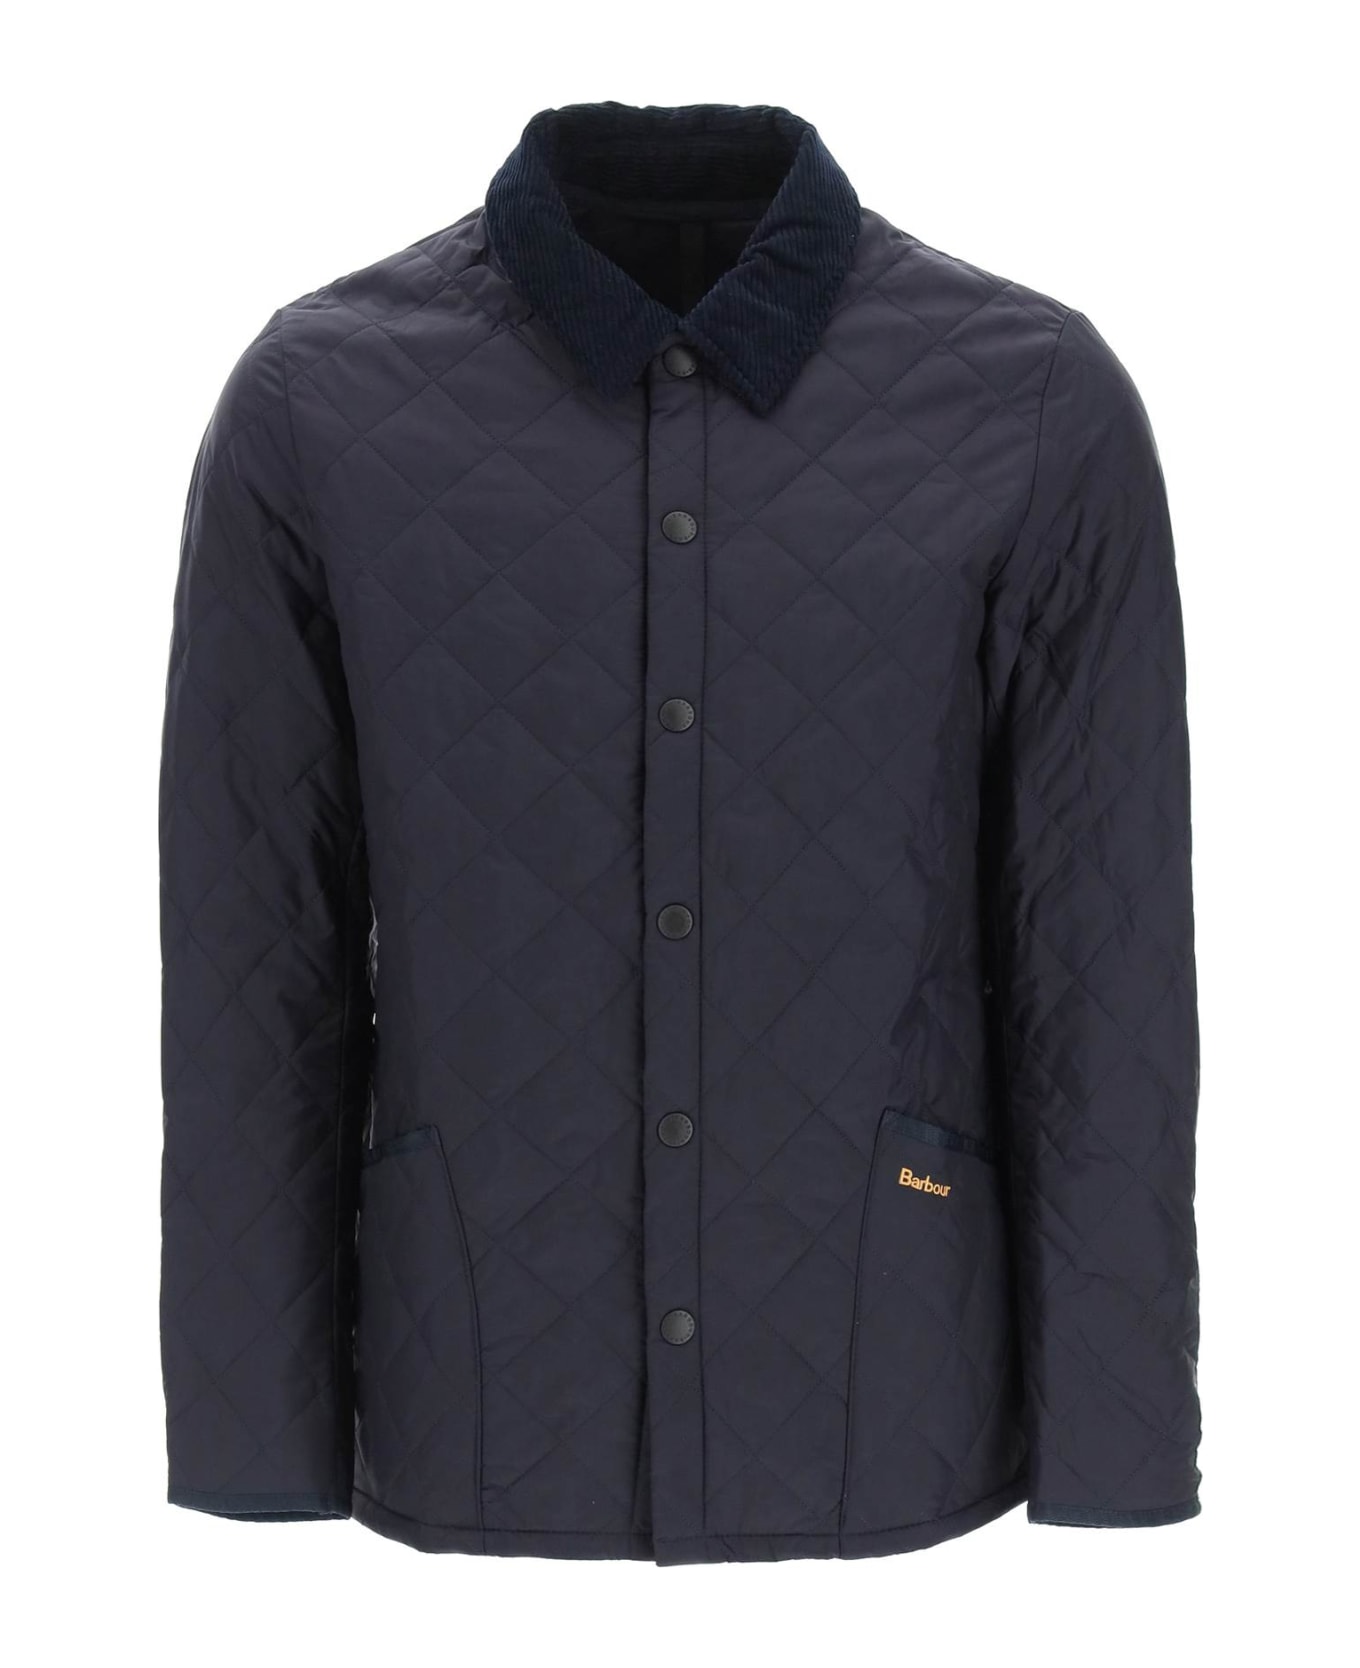 Barbour Heritage Liddesdale Quilted Jacket - NAVY (Blue) ジャケット